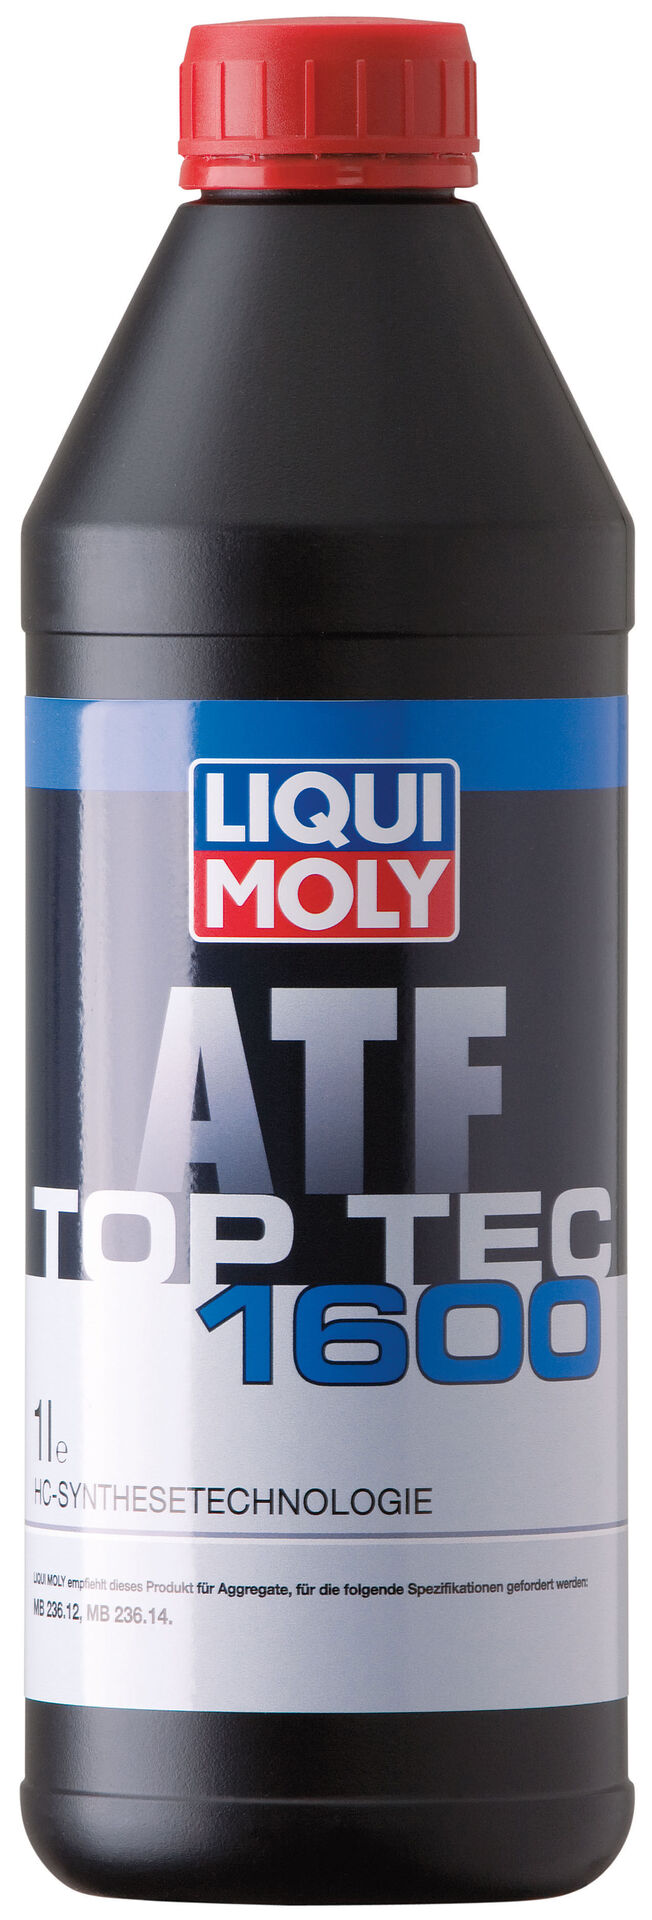 LIQUI MOLY Top Tec ATF, 1100 Automatikgetriebeöl 3652 ATF III, 5l